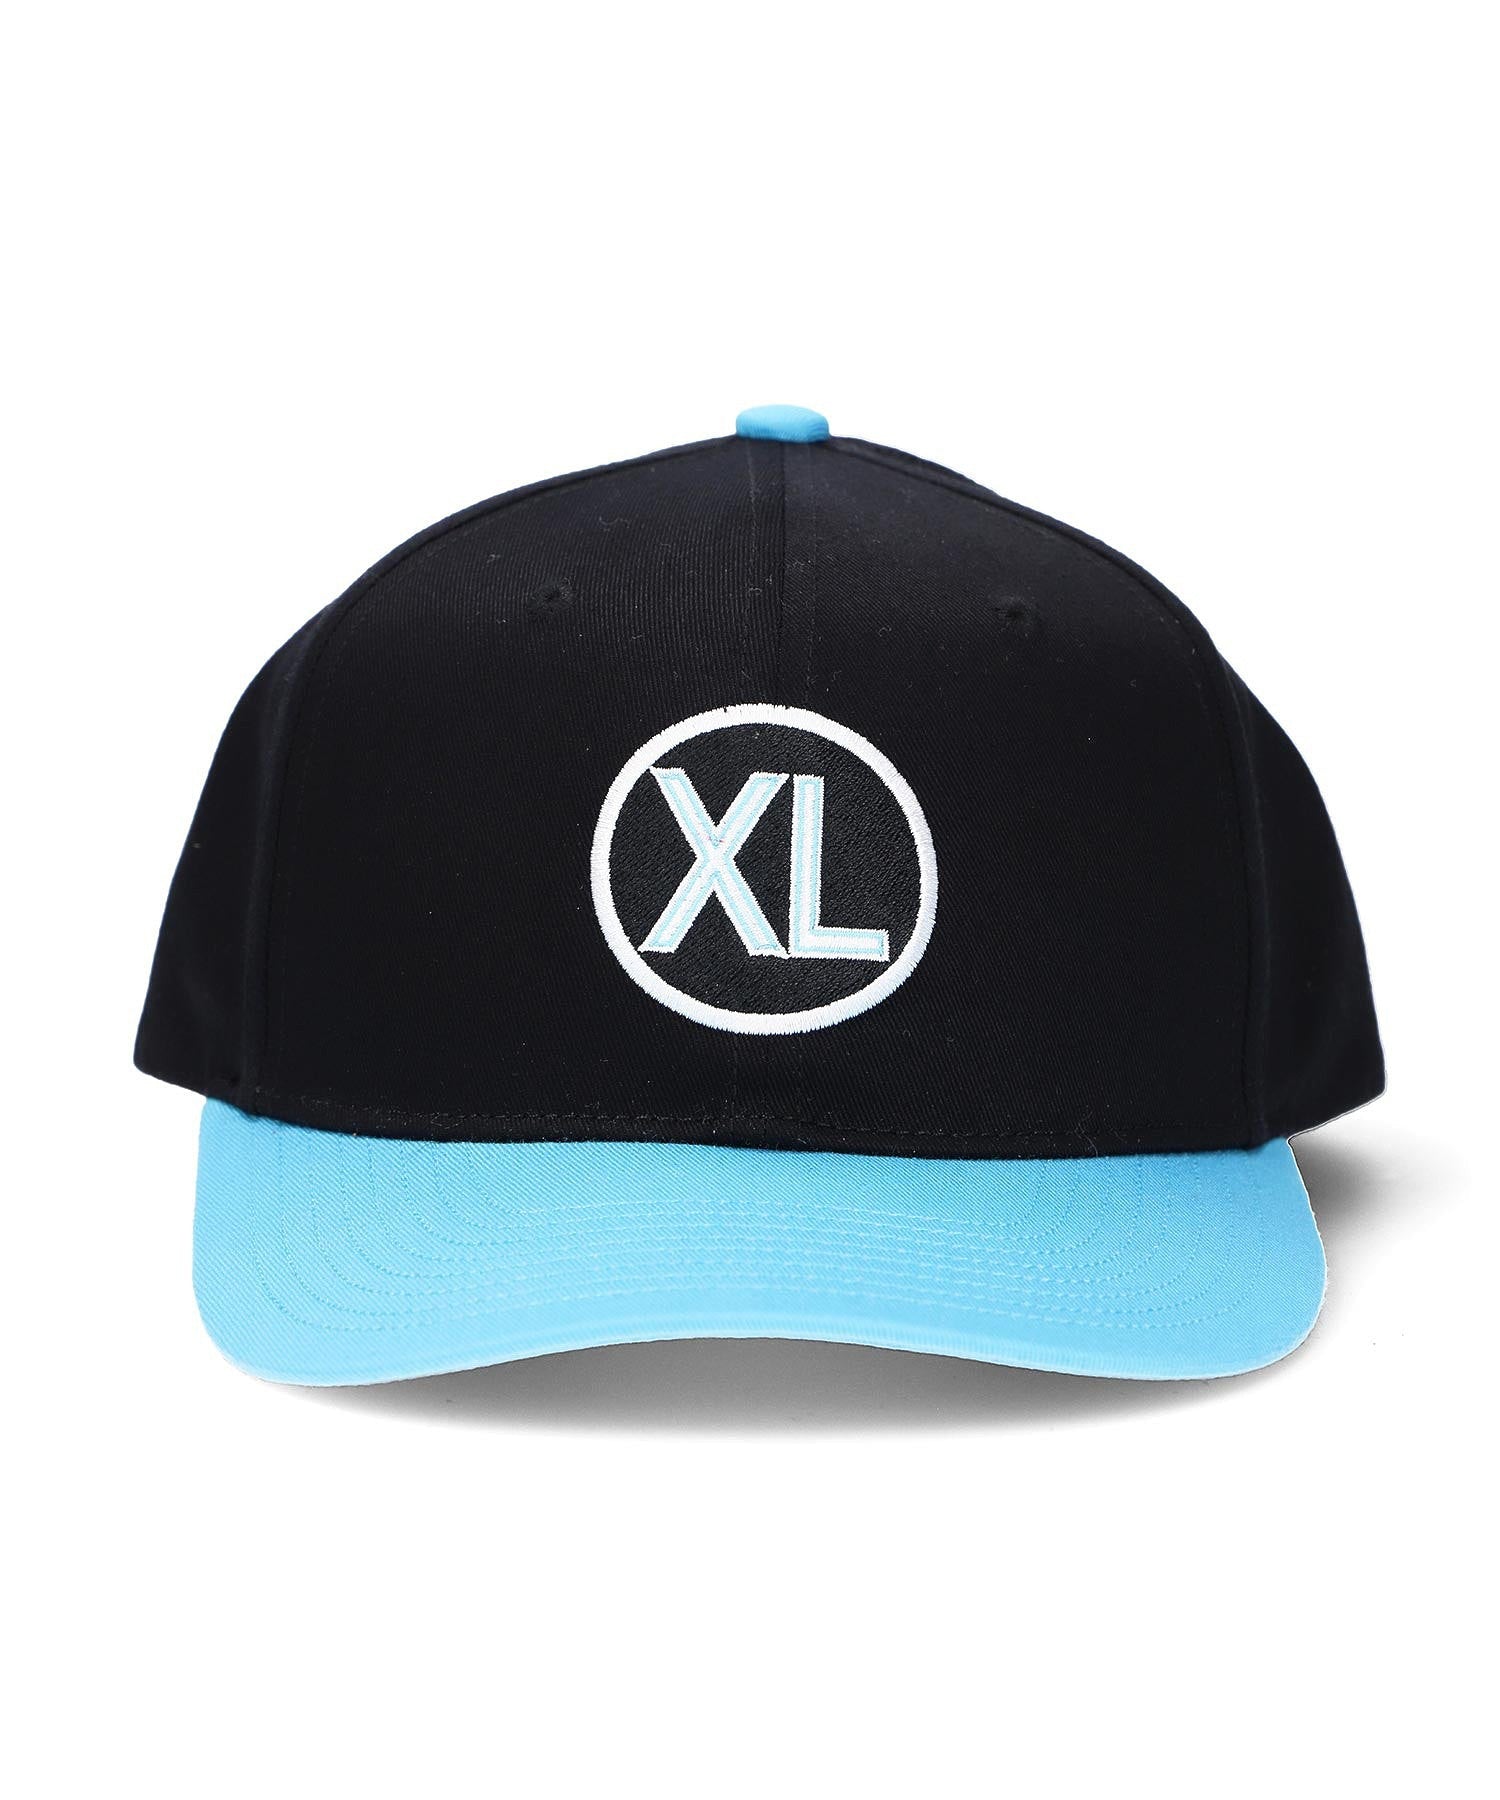 CIRCLE XL CAP XLARGE